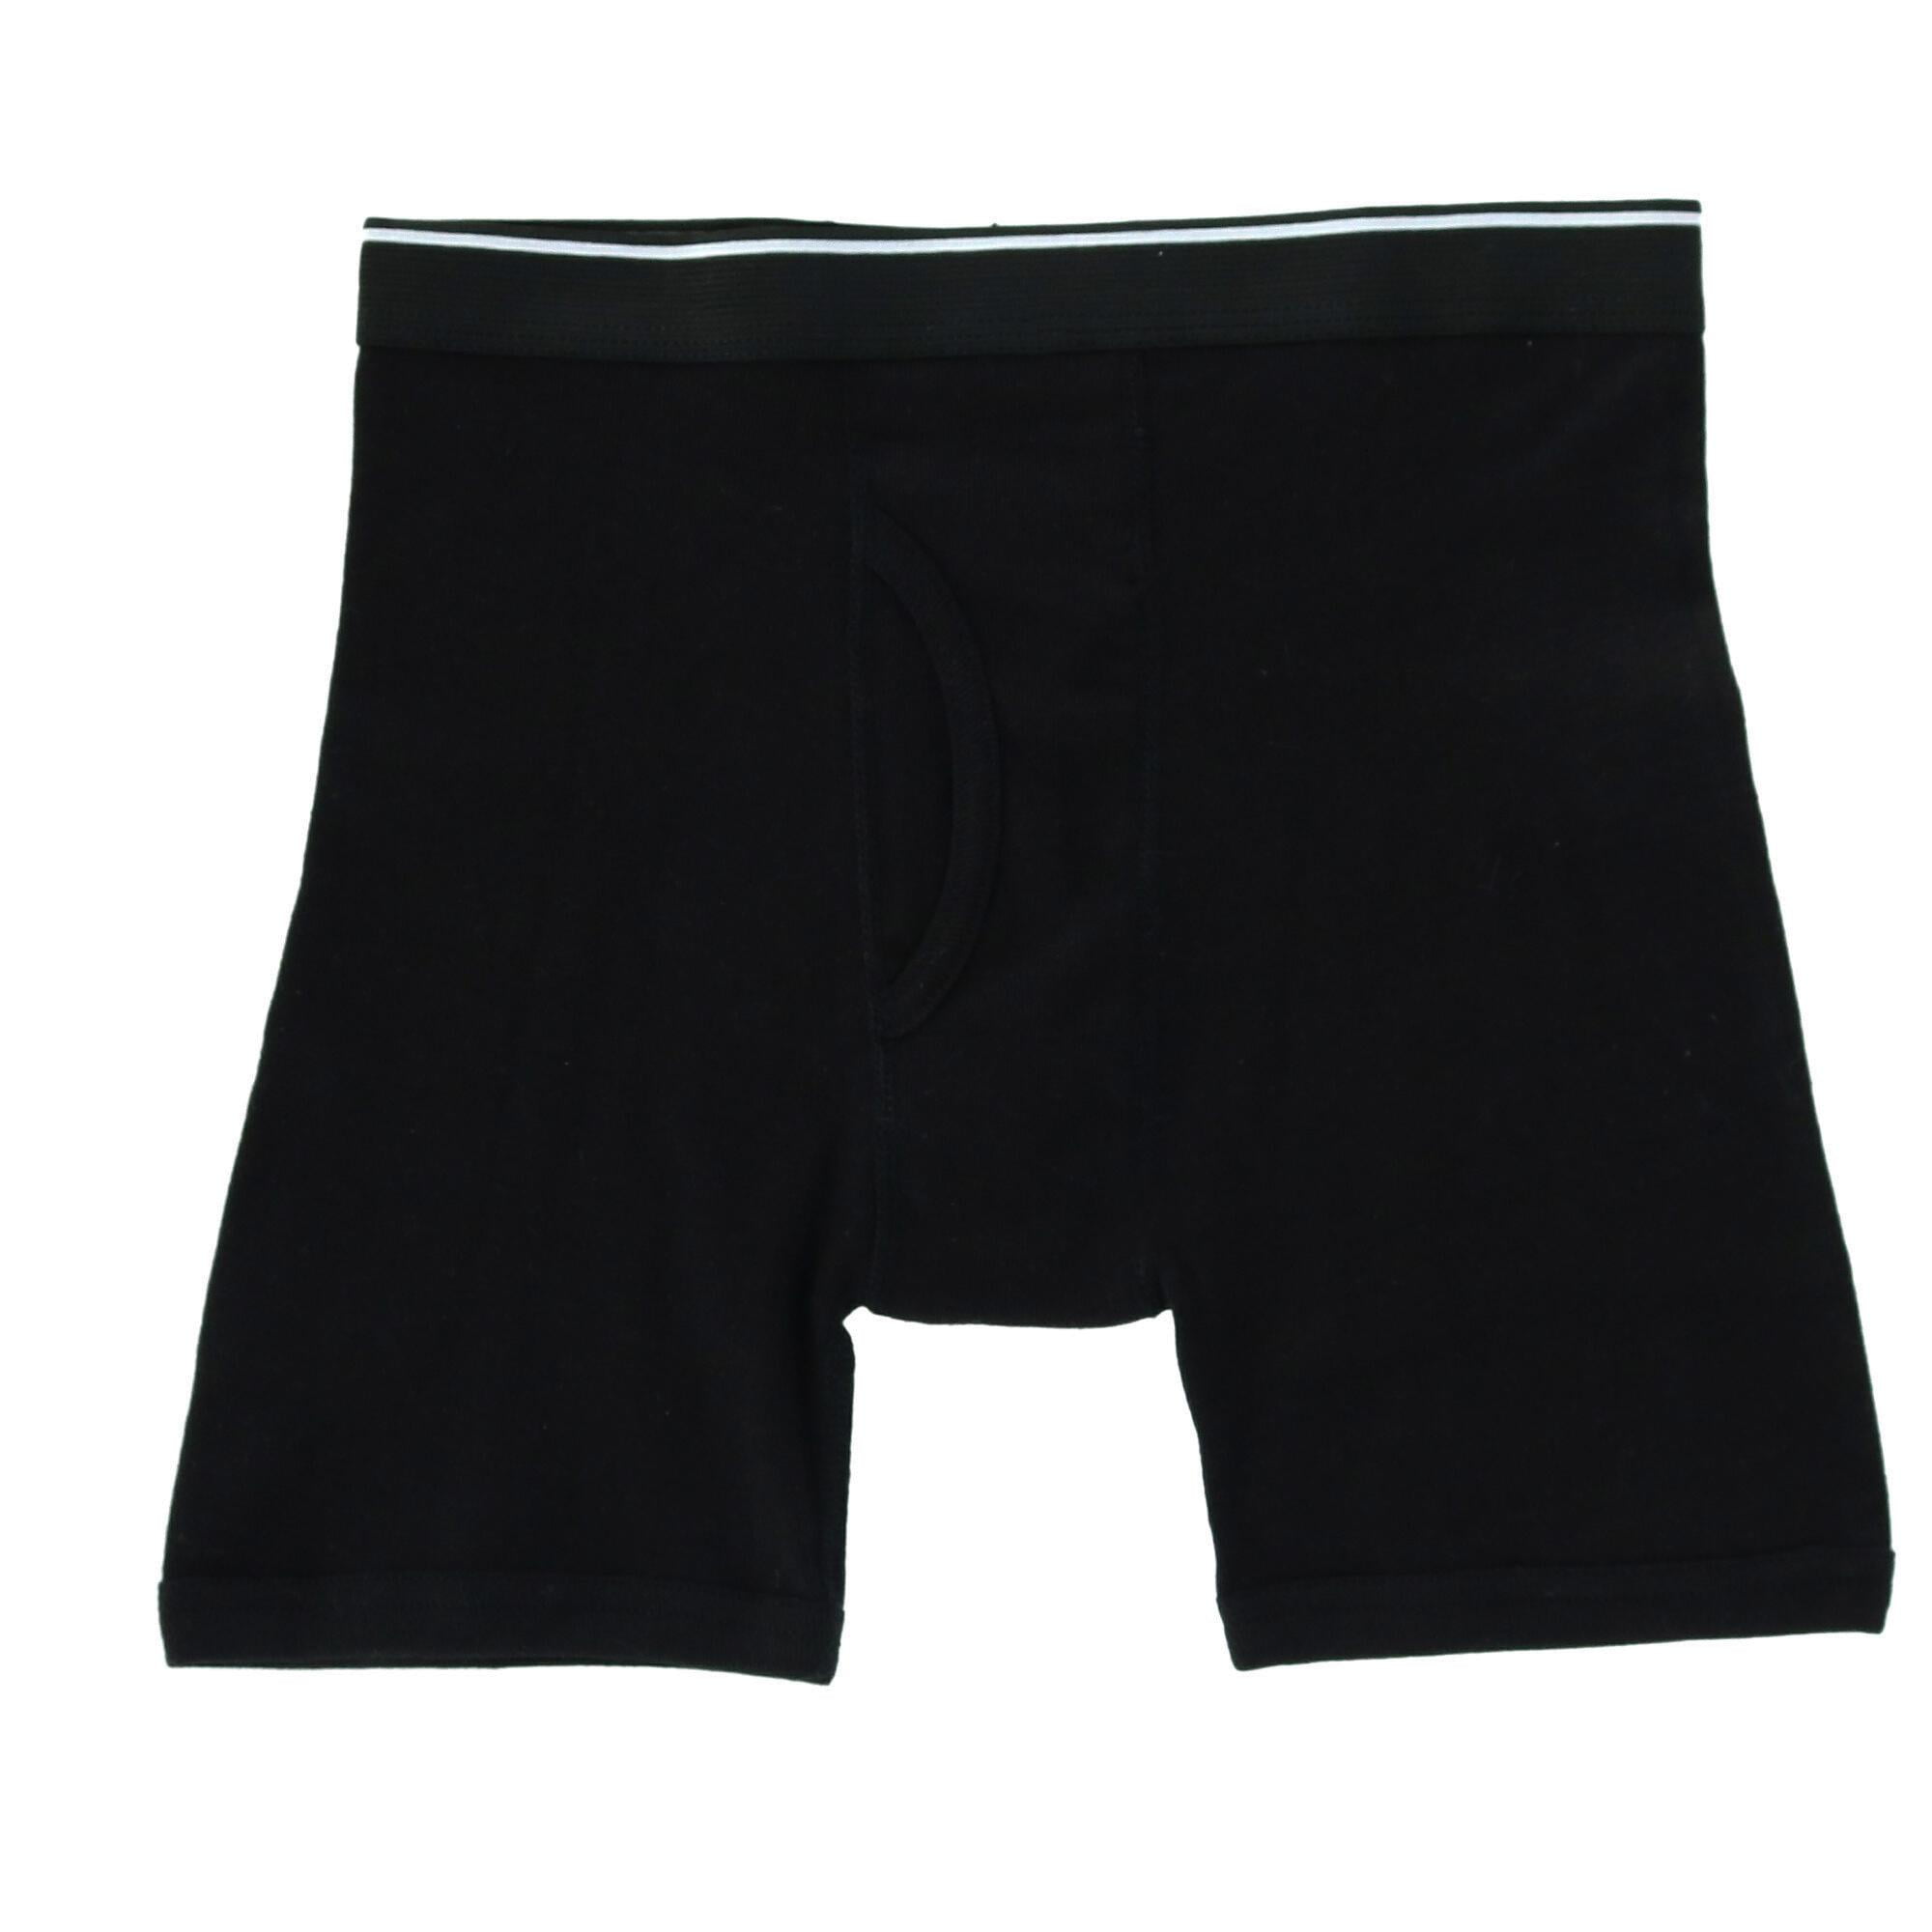 Topman Men's Solid Boxer Briefs Underwear (3 Pair Pack) | Walmart Canada